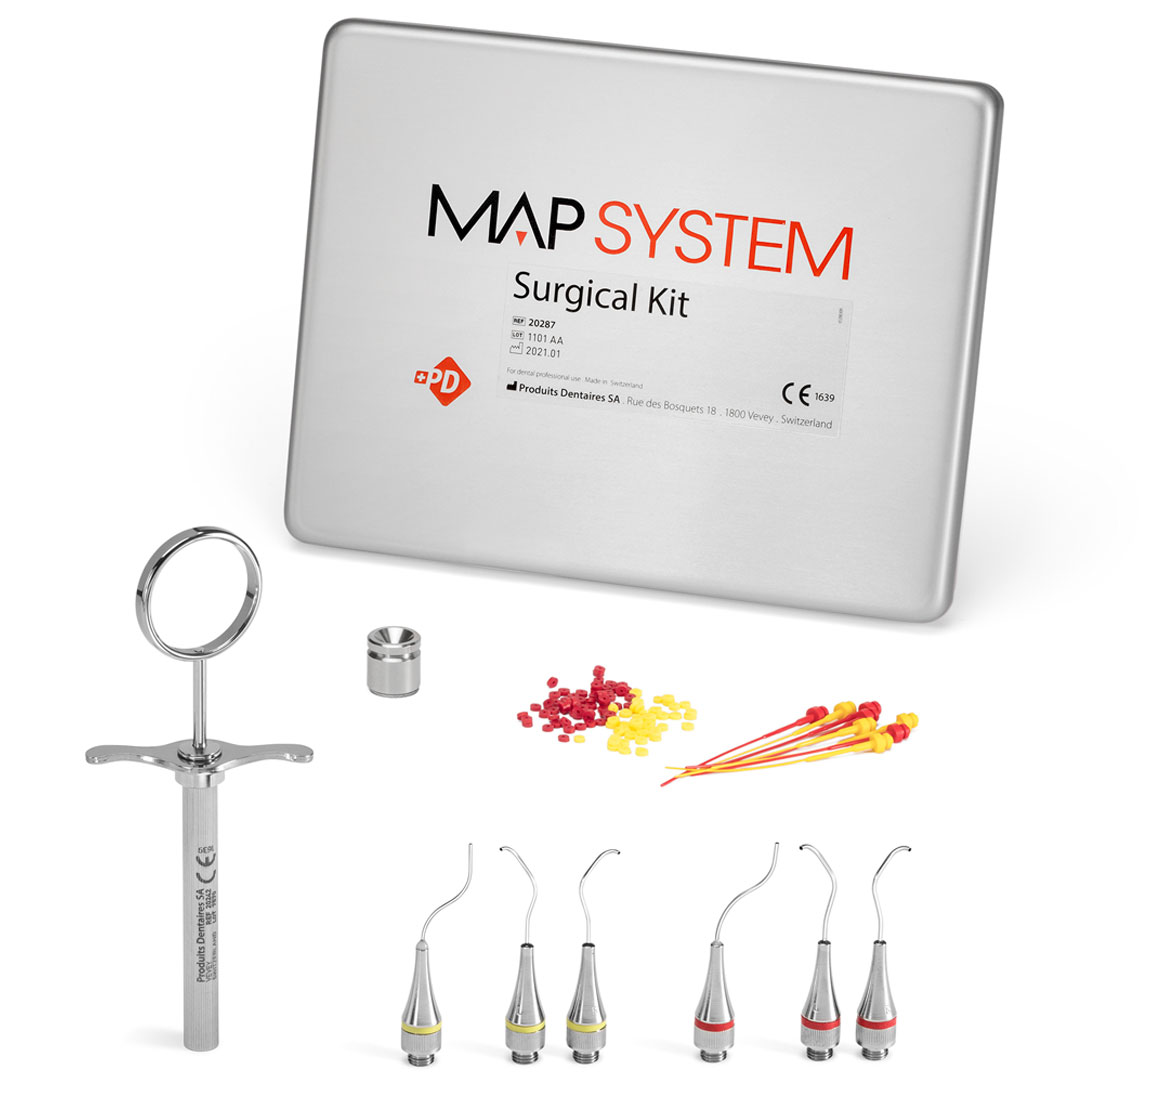 Compre productos del kit Quirúrgico Map System®.